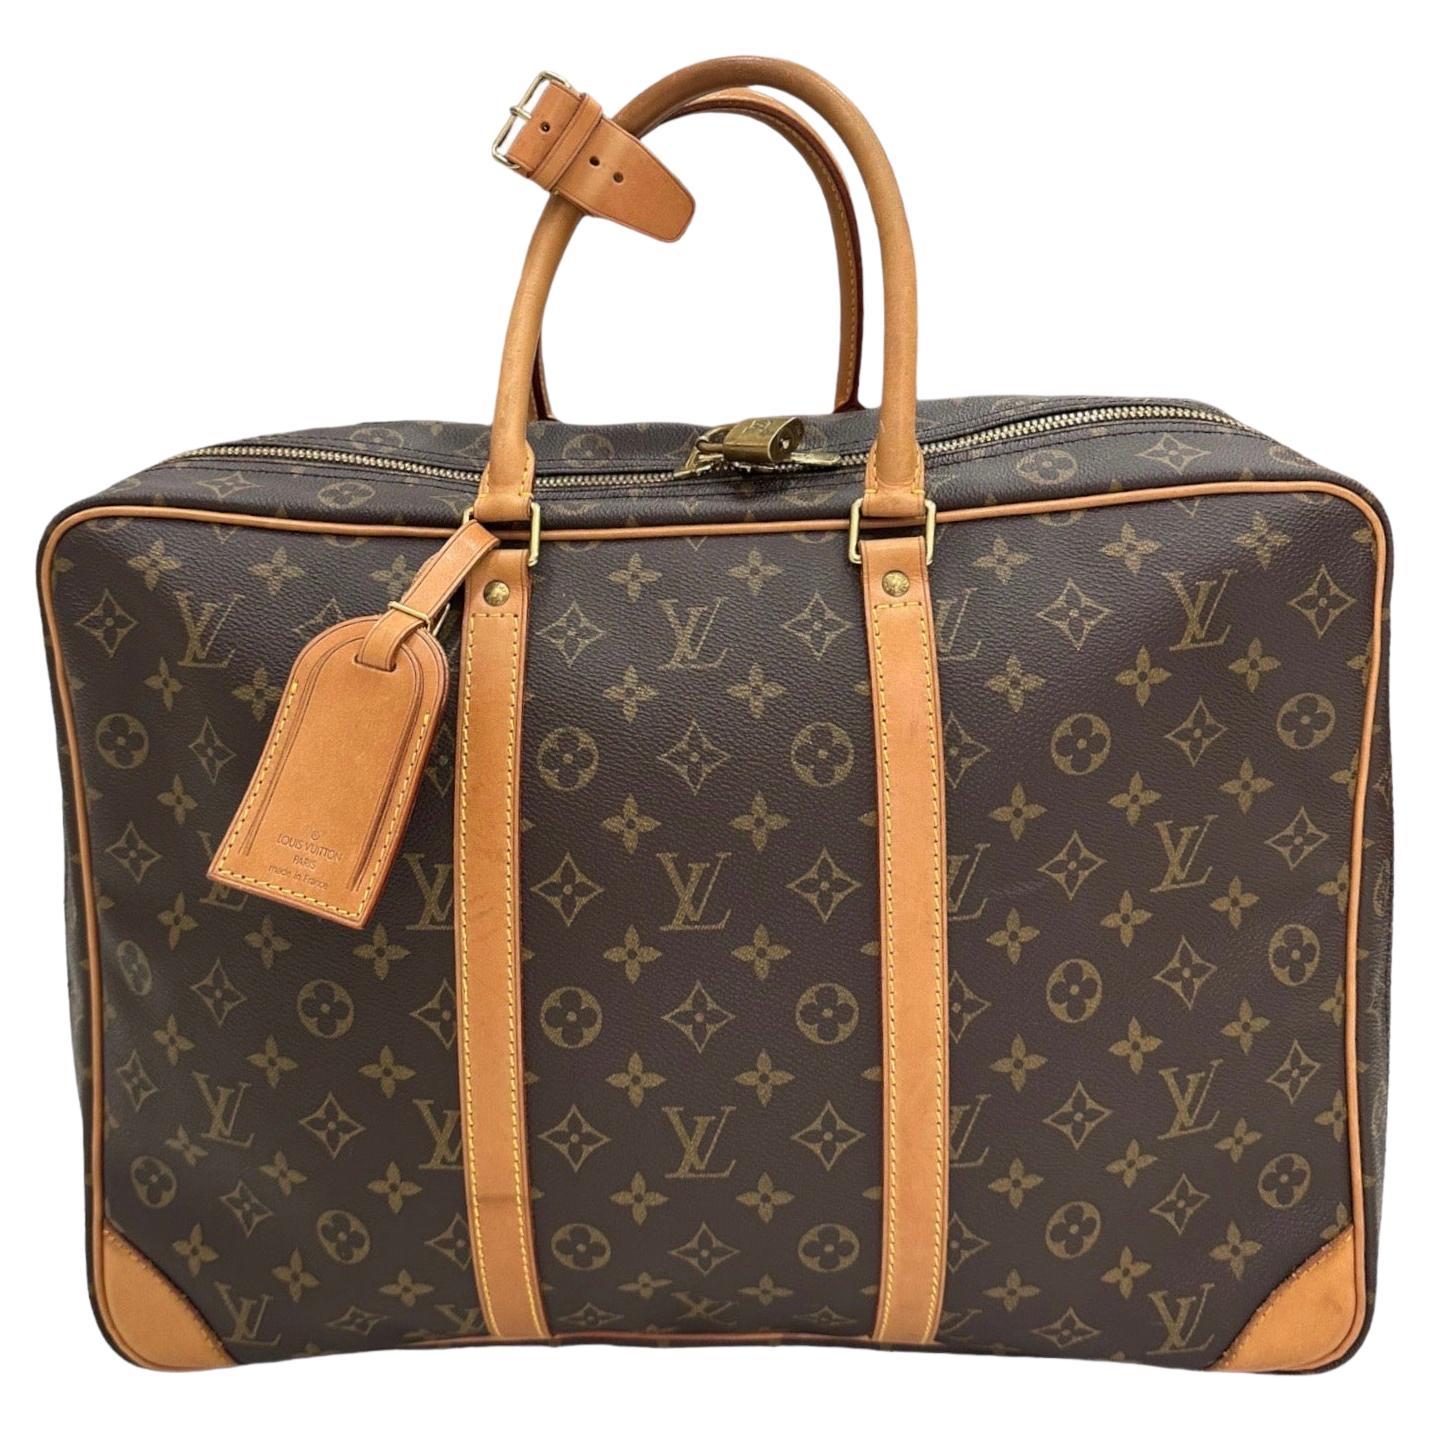 Does Louis Vuitton repair vintage bags?